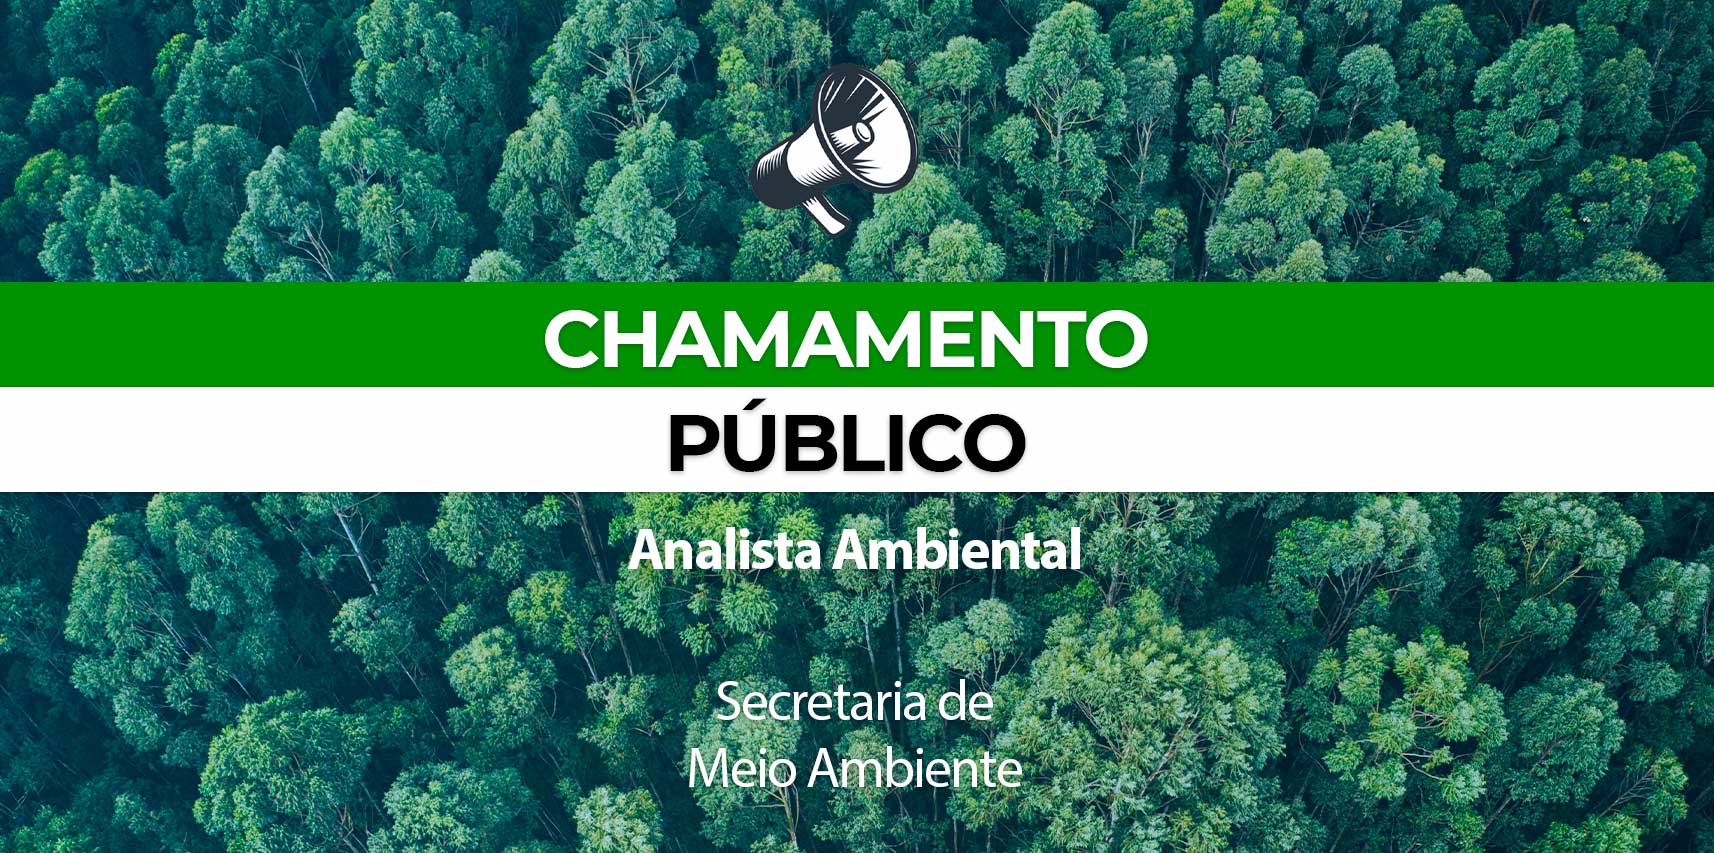 Secretaria de Meio Ambiente realiza chamamento público para credenciamento e contratação de analista ambiental